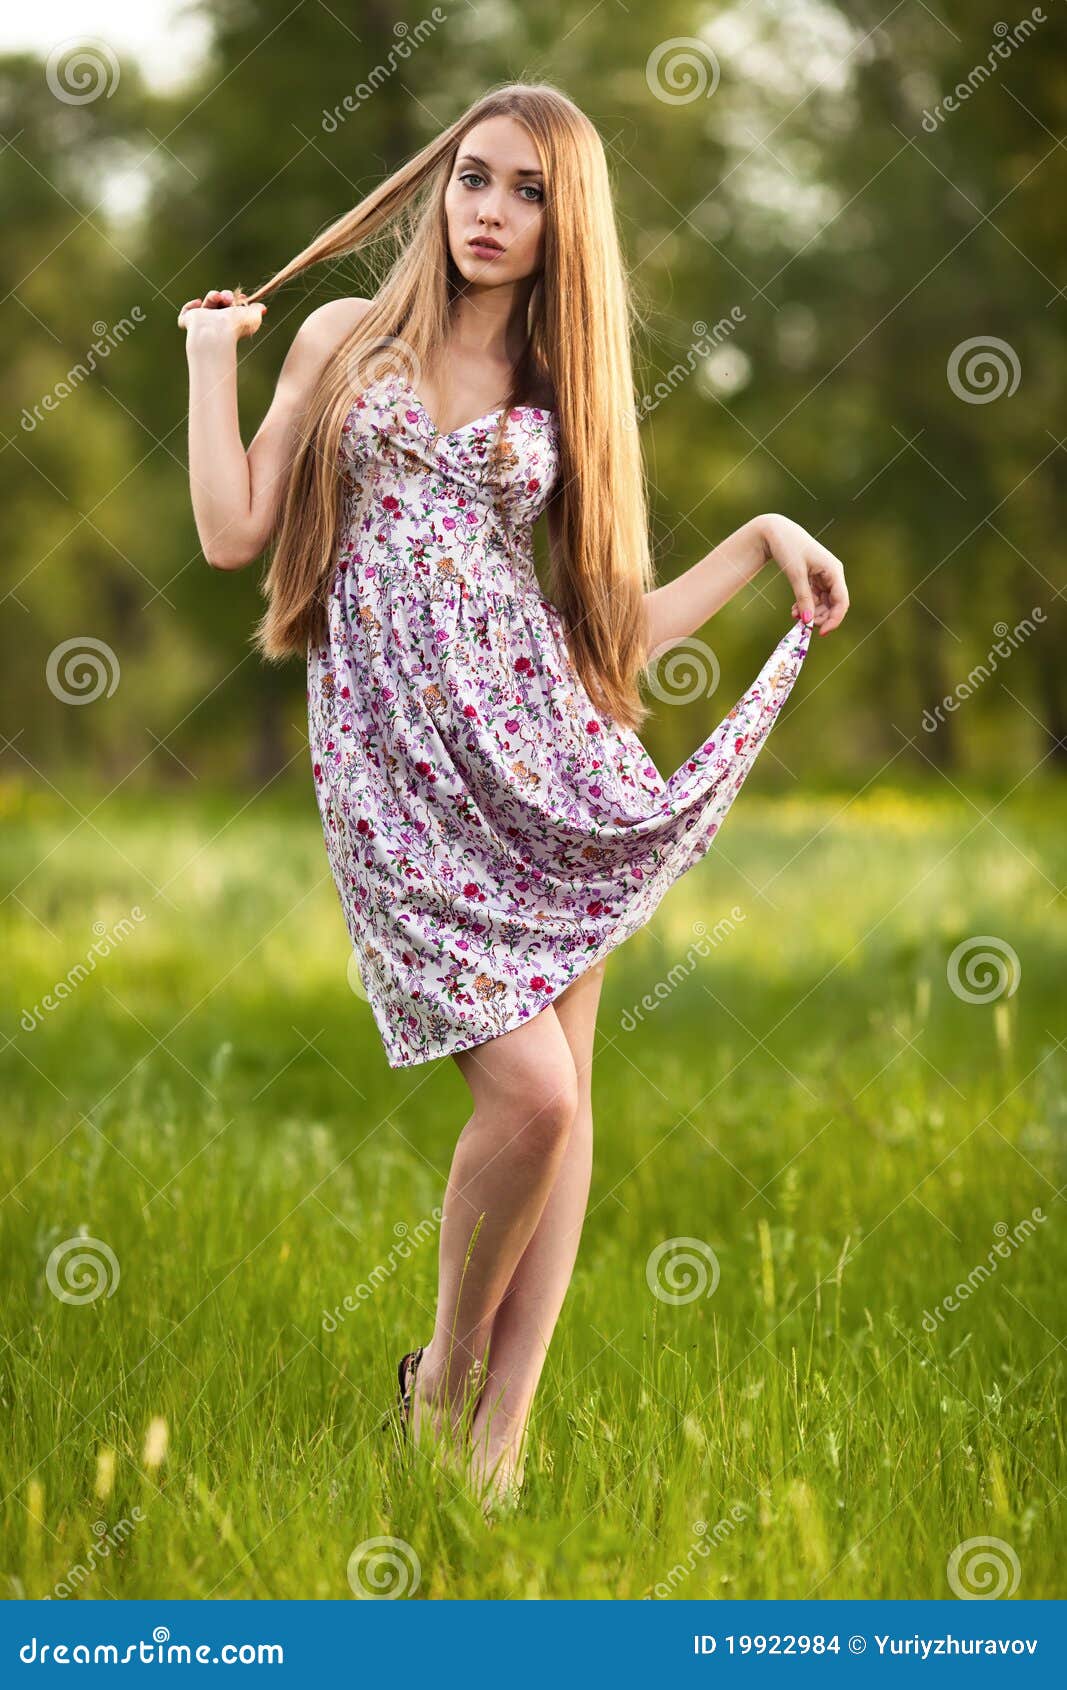 beauty blonde outdoor Woman